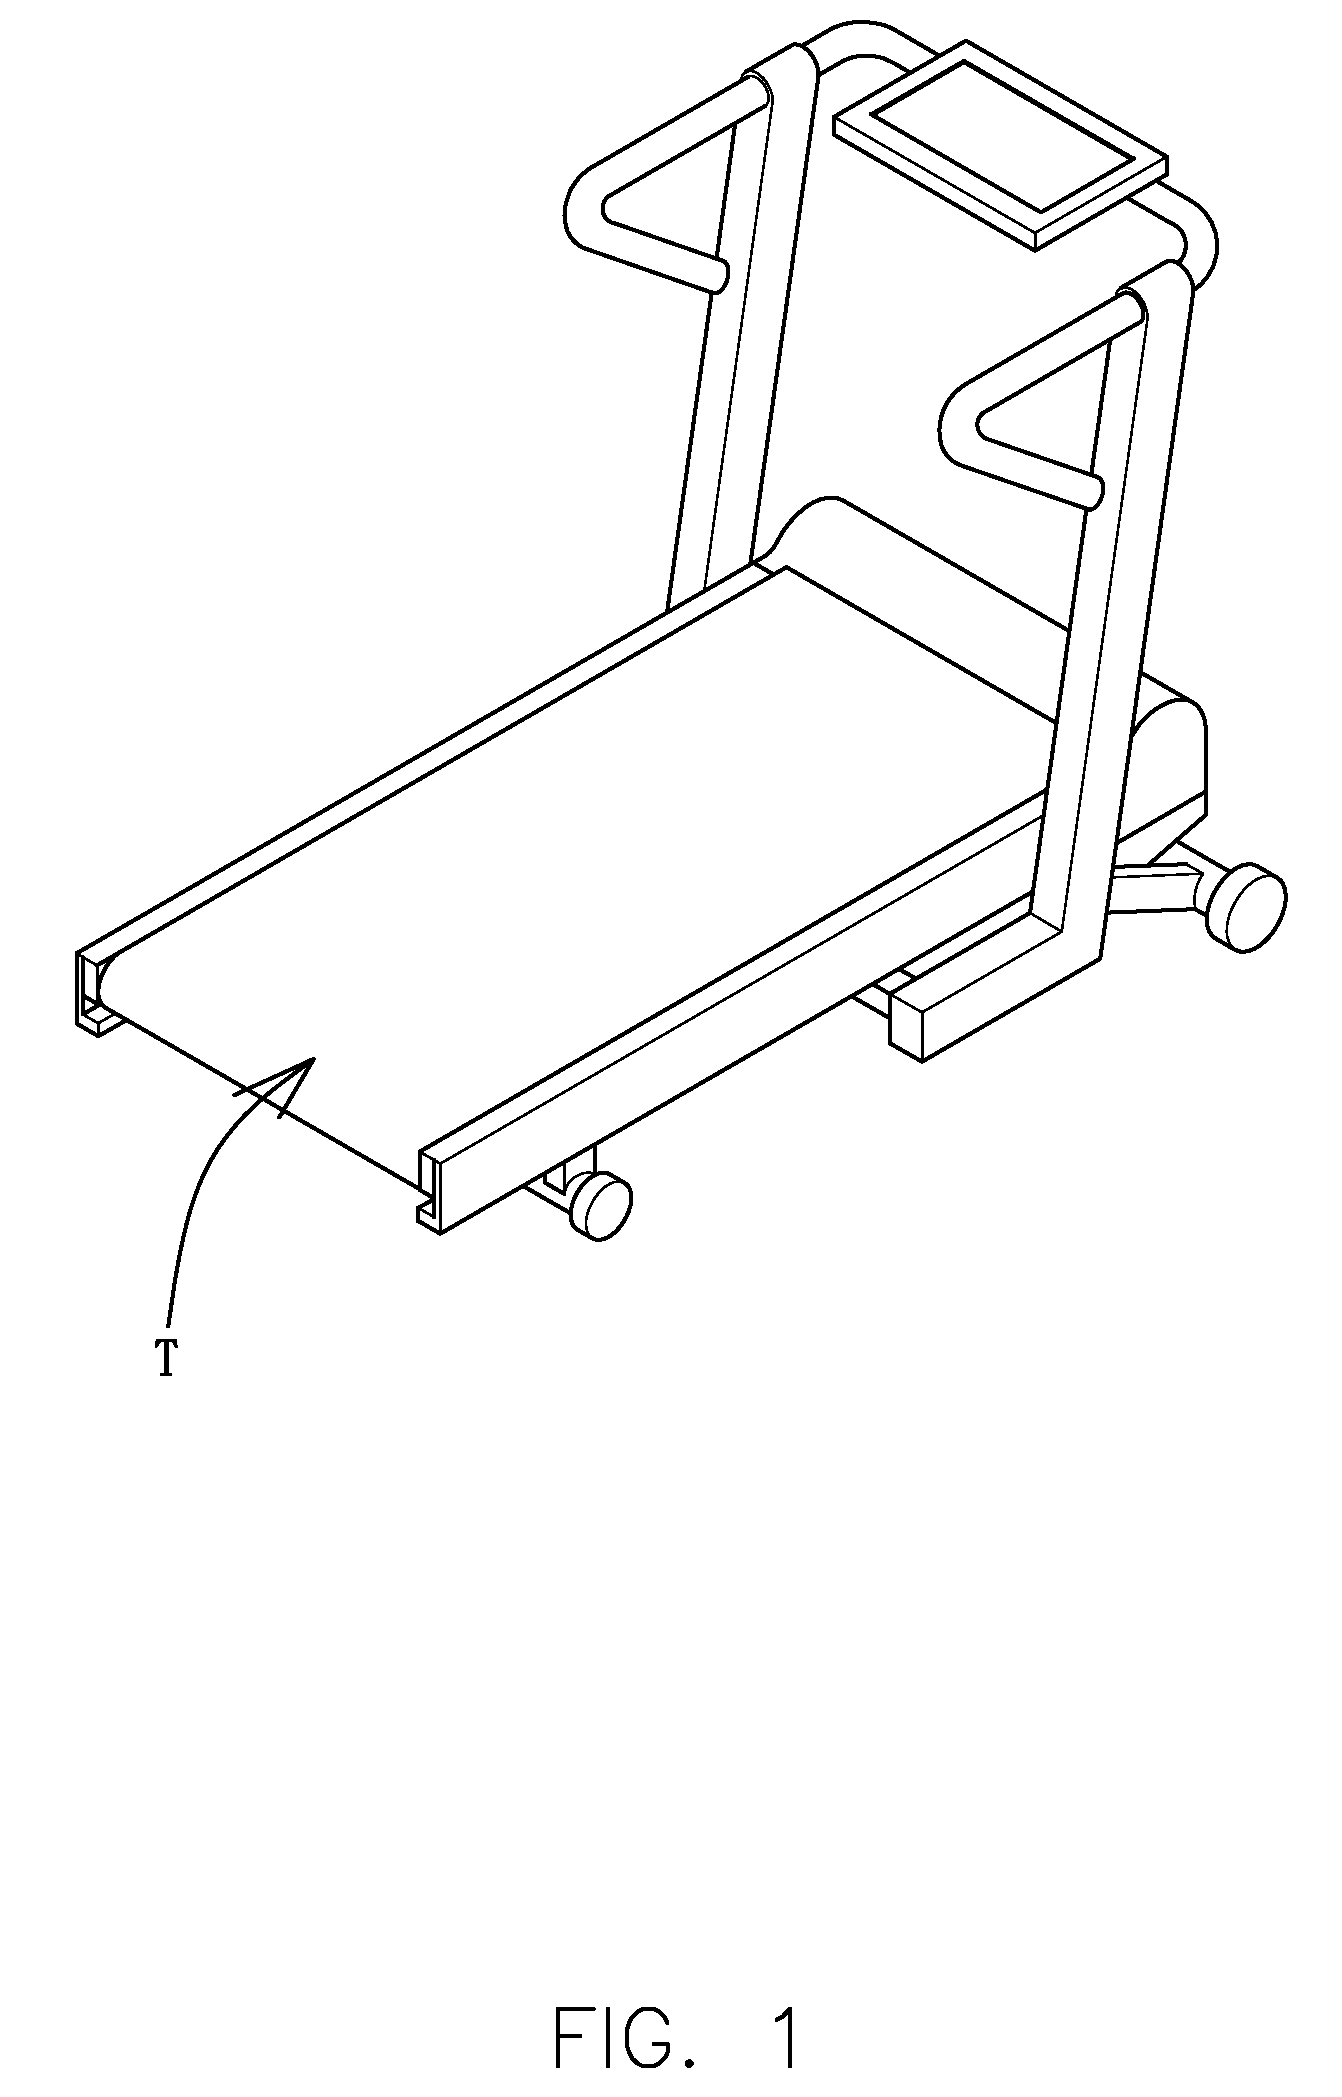 Conveyor belt or Treadmill belt